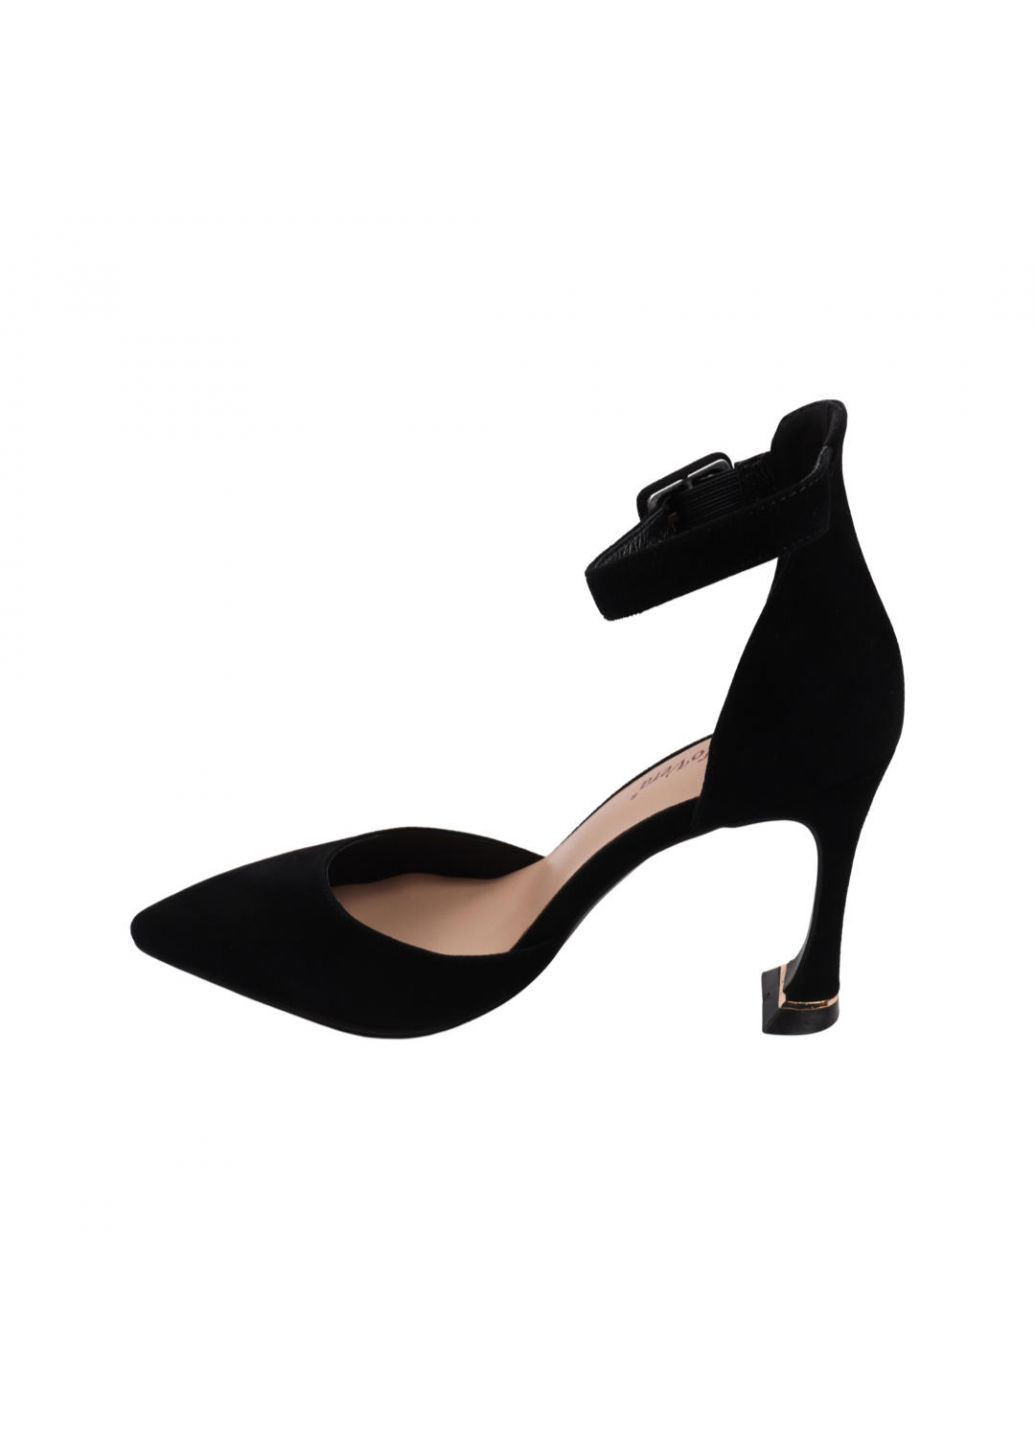 Туфлі жіночі чорні натуральна замша Angelo Vani 191-22lt (257439443)